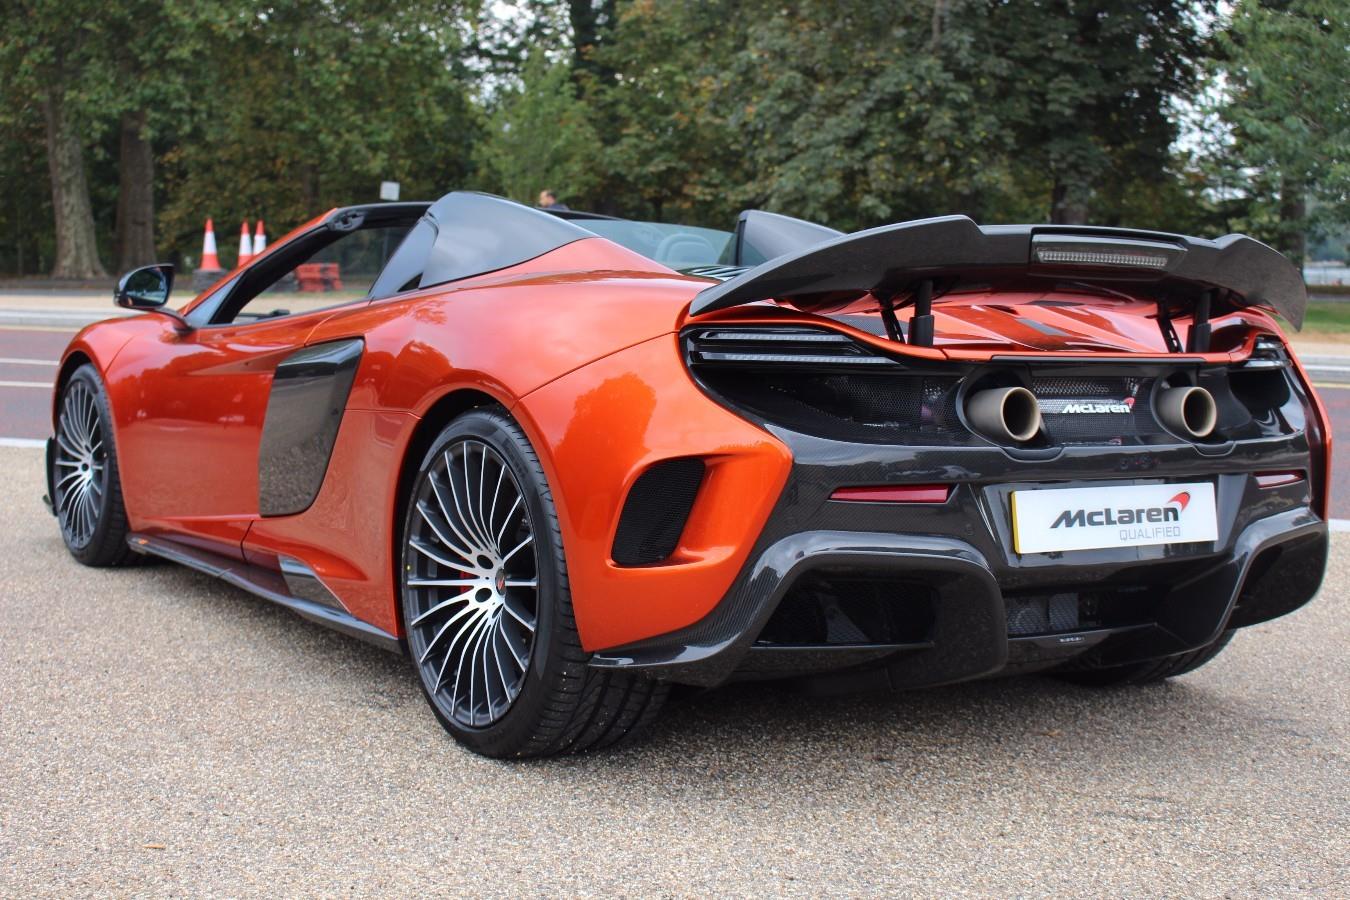 MSO Volcano Orange McLaren 675LT Spider продается за 423,950 фунтов